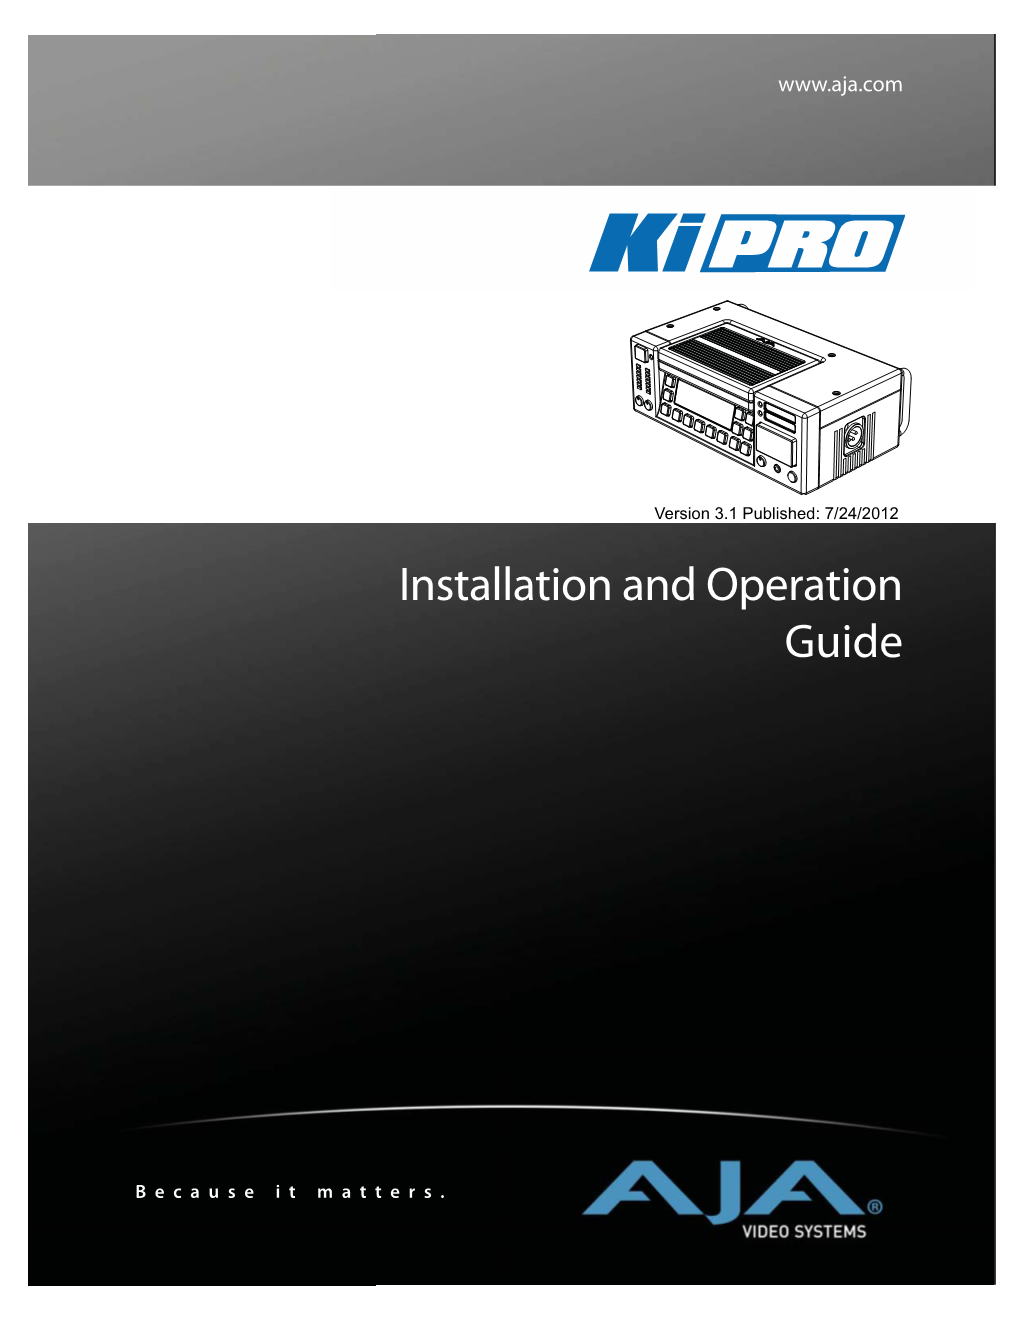 AJA Ki Pro Installation and Operation Guide